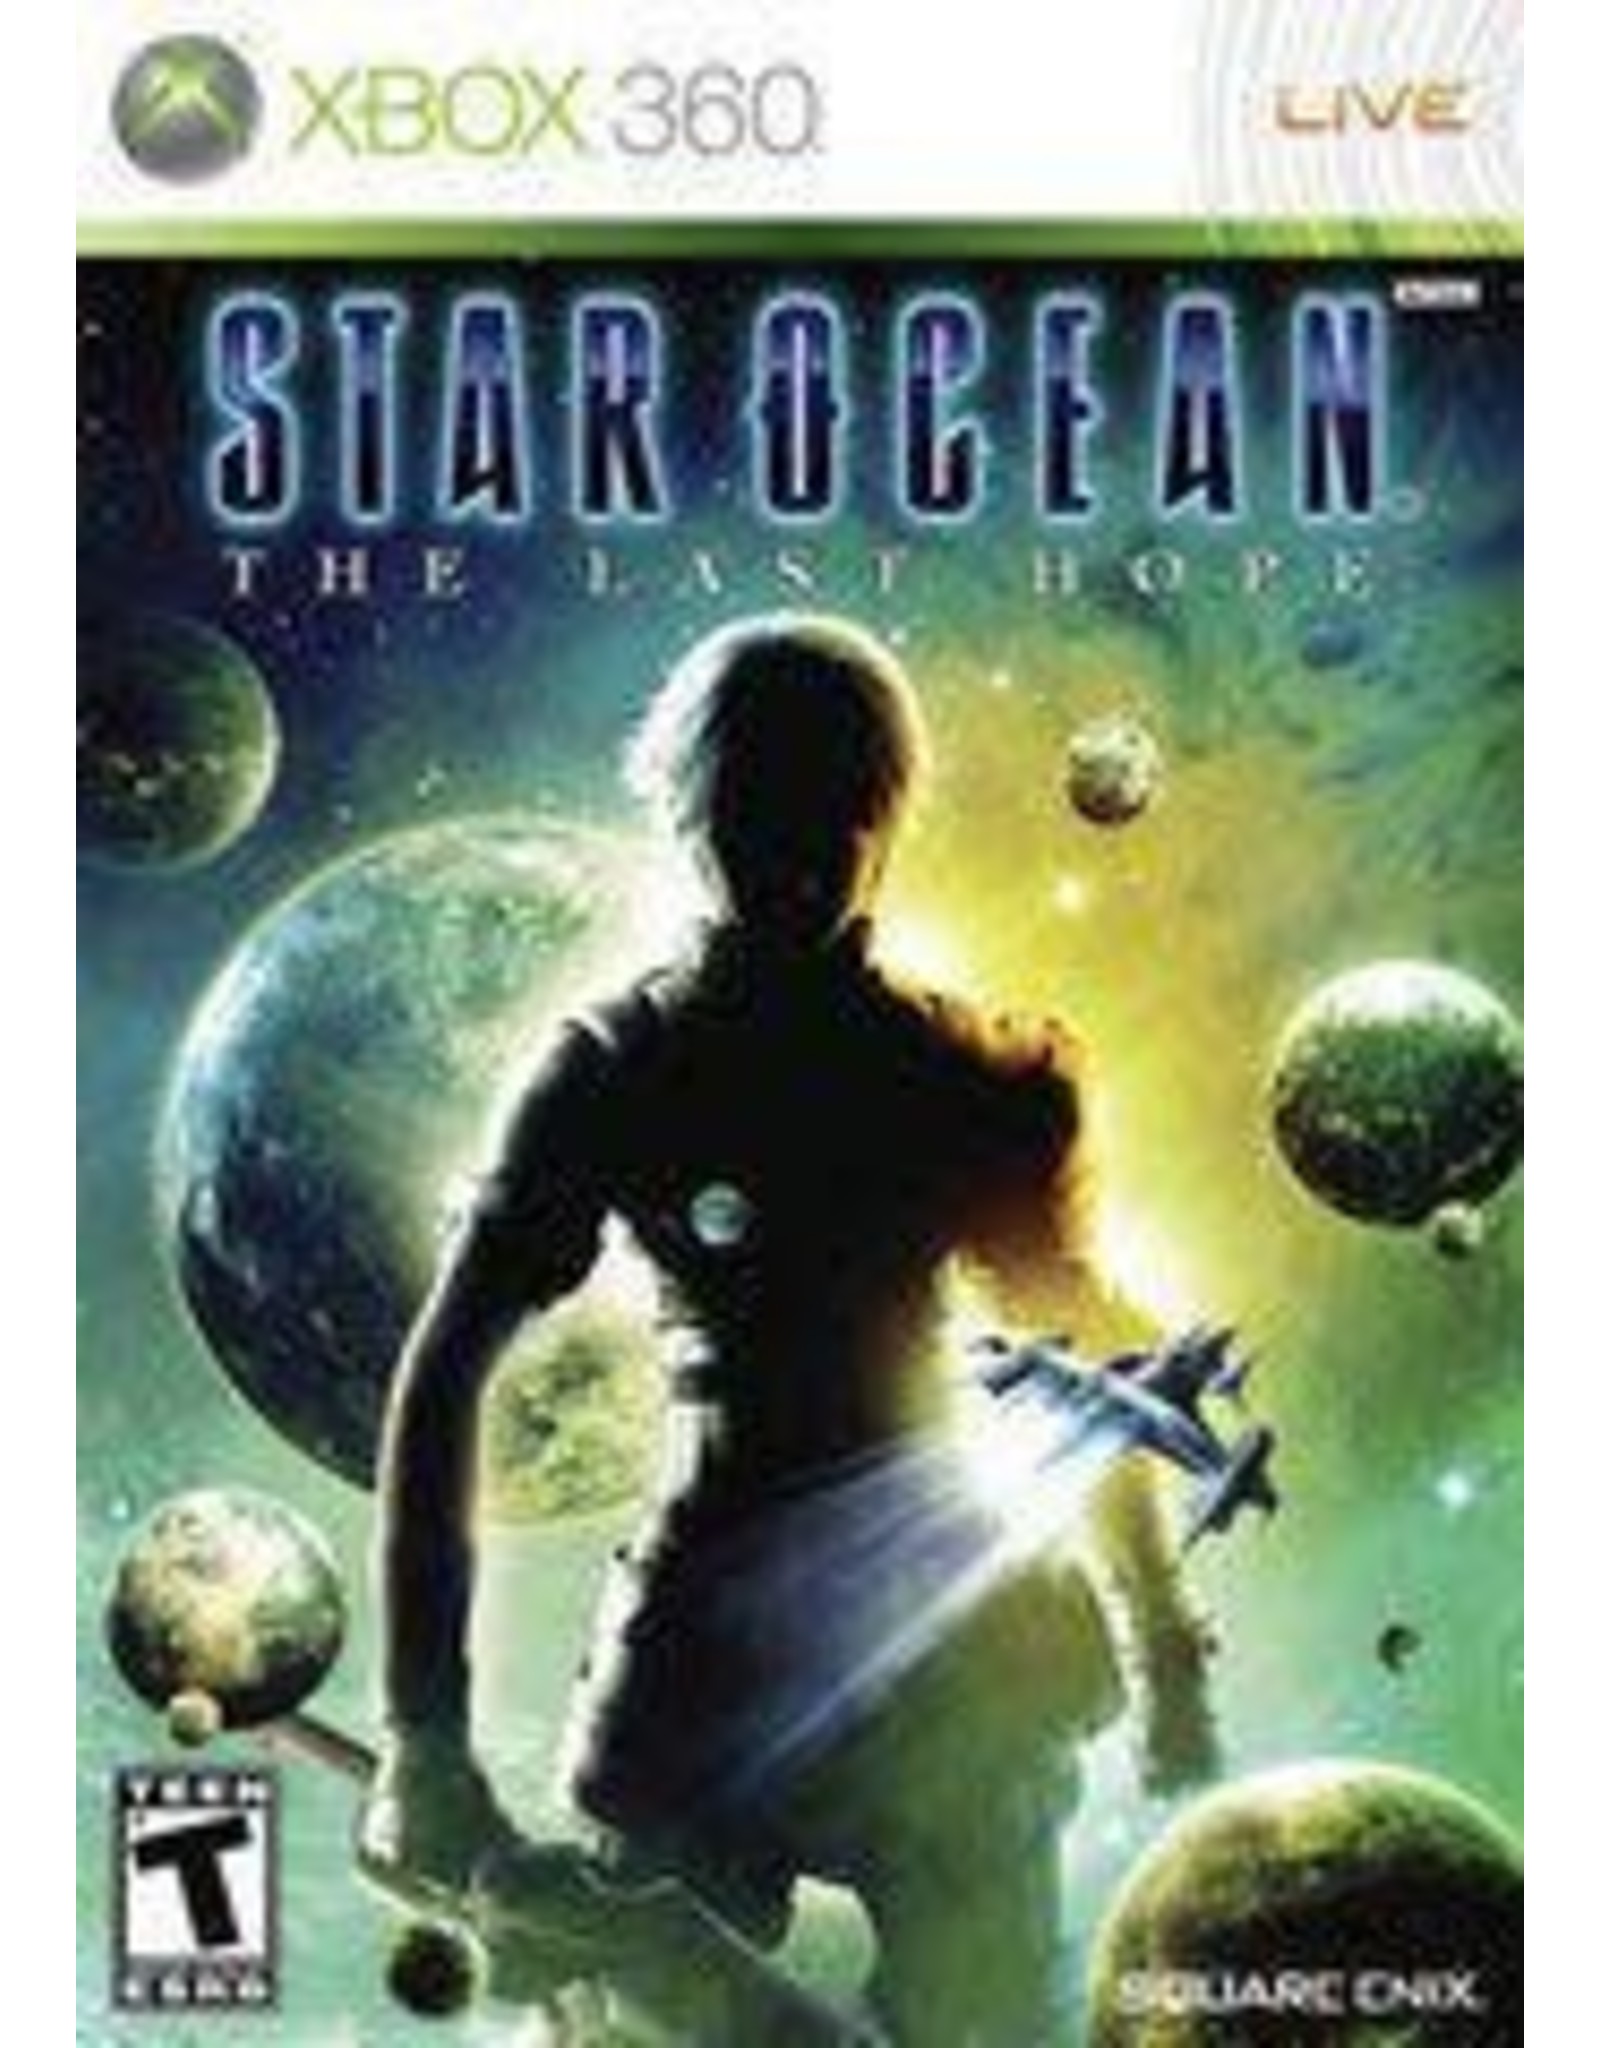 Xbox 360 Star Ocean: The Last Hope (CiB)